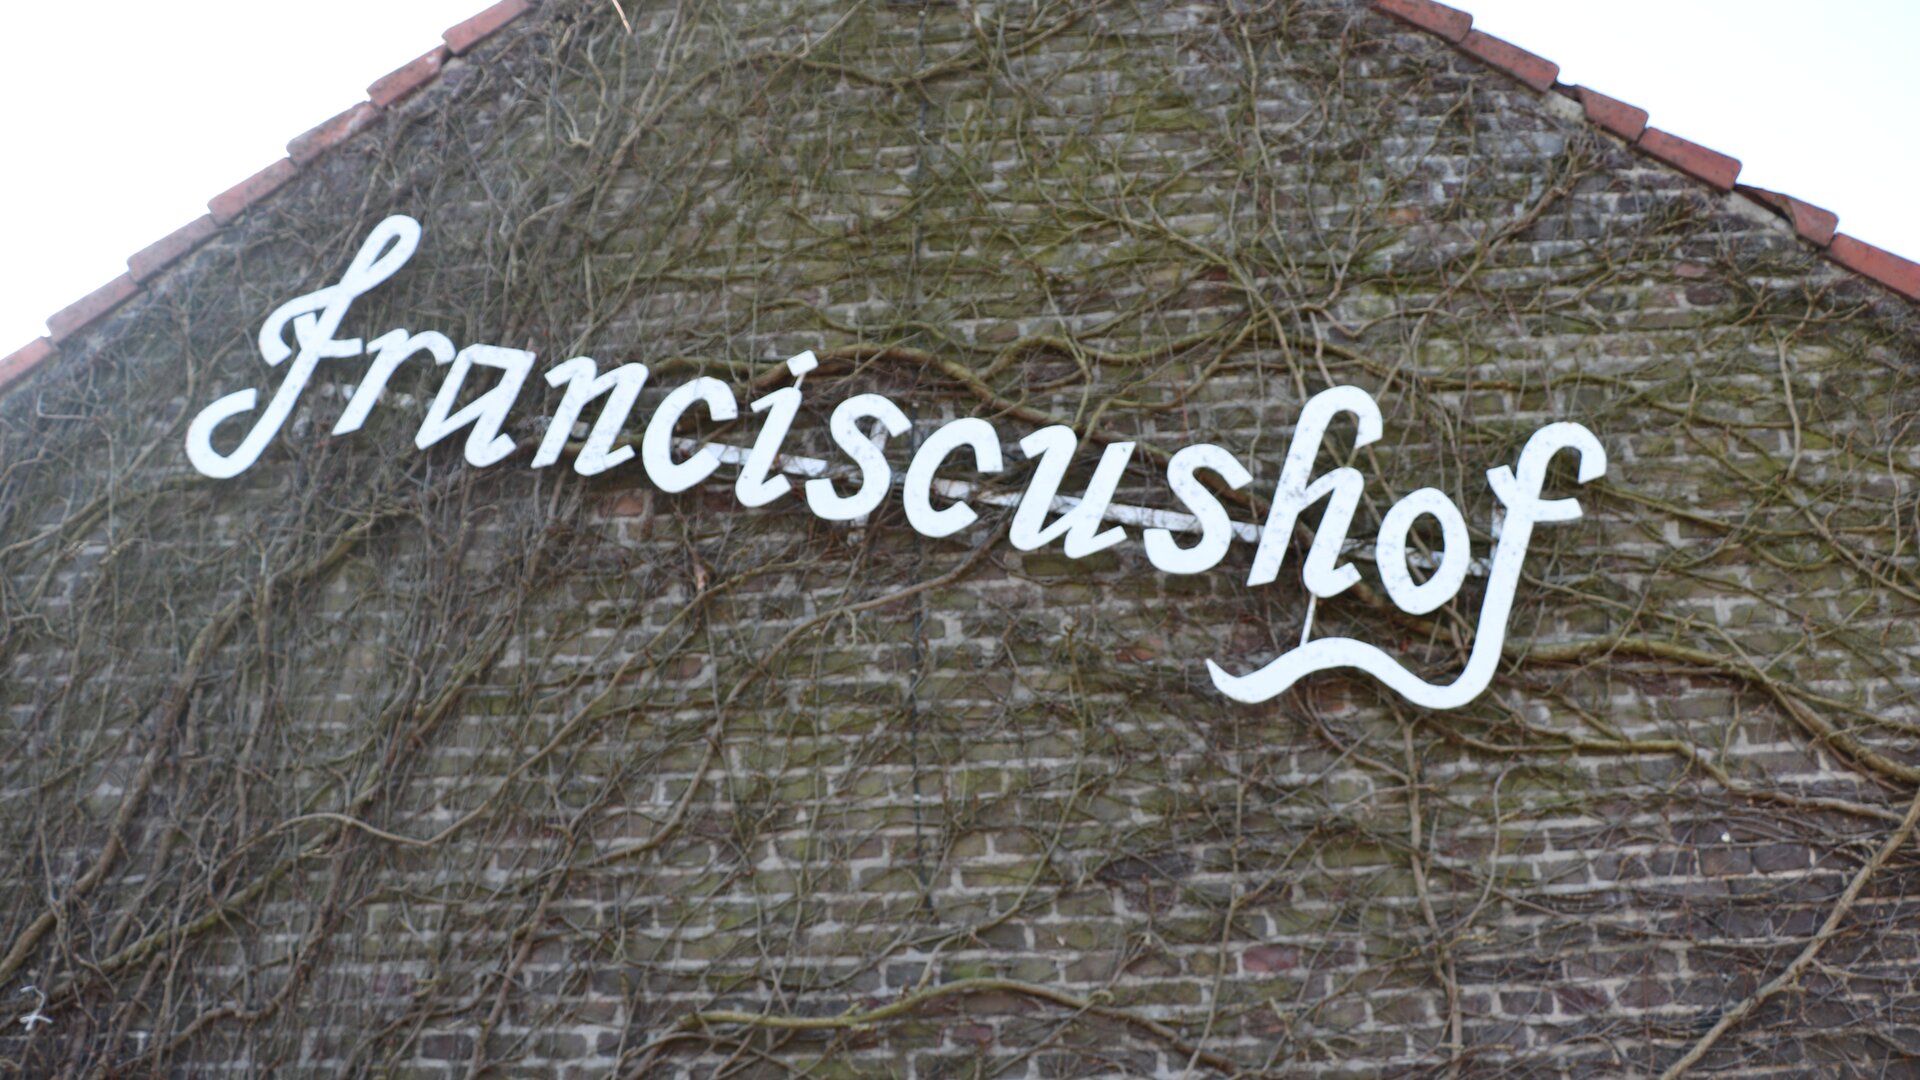 Franciscushof - Franciscushof